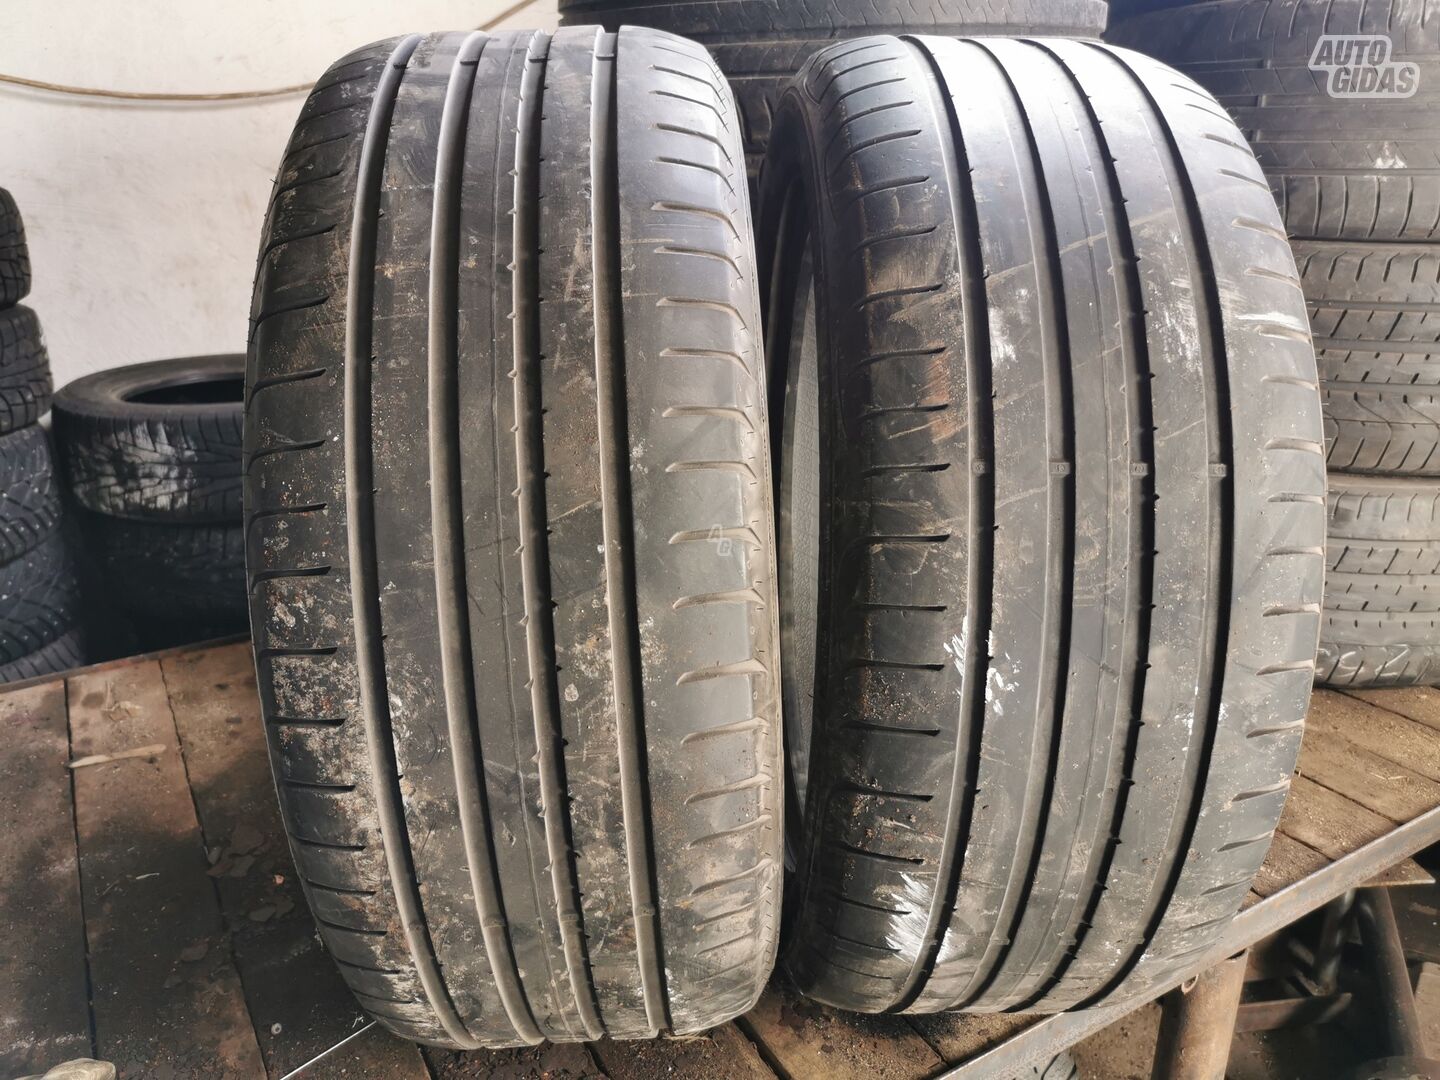 Goodyear R18 summer tyres passanger car